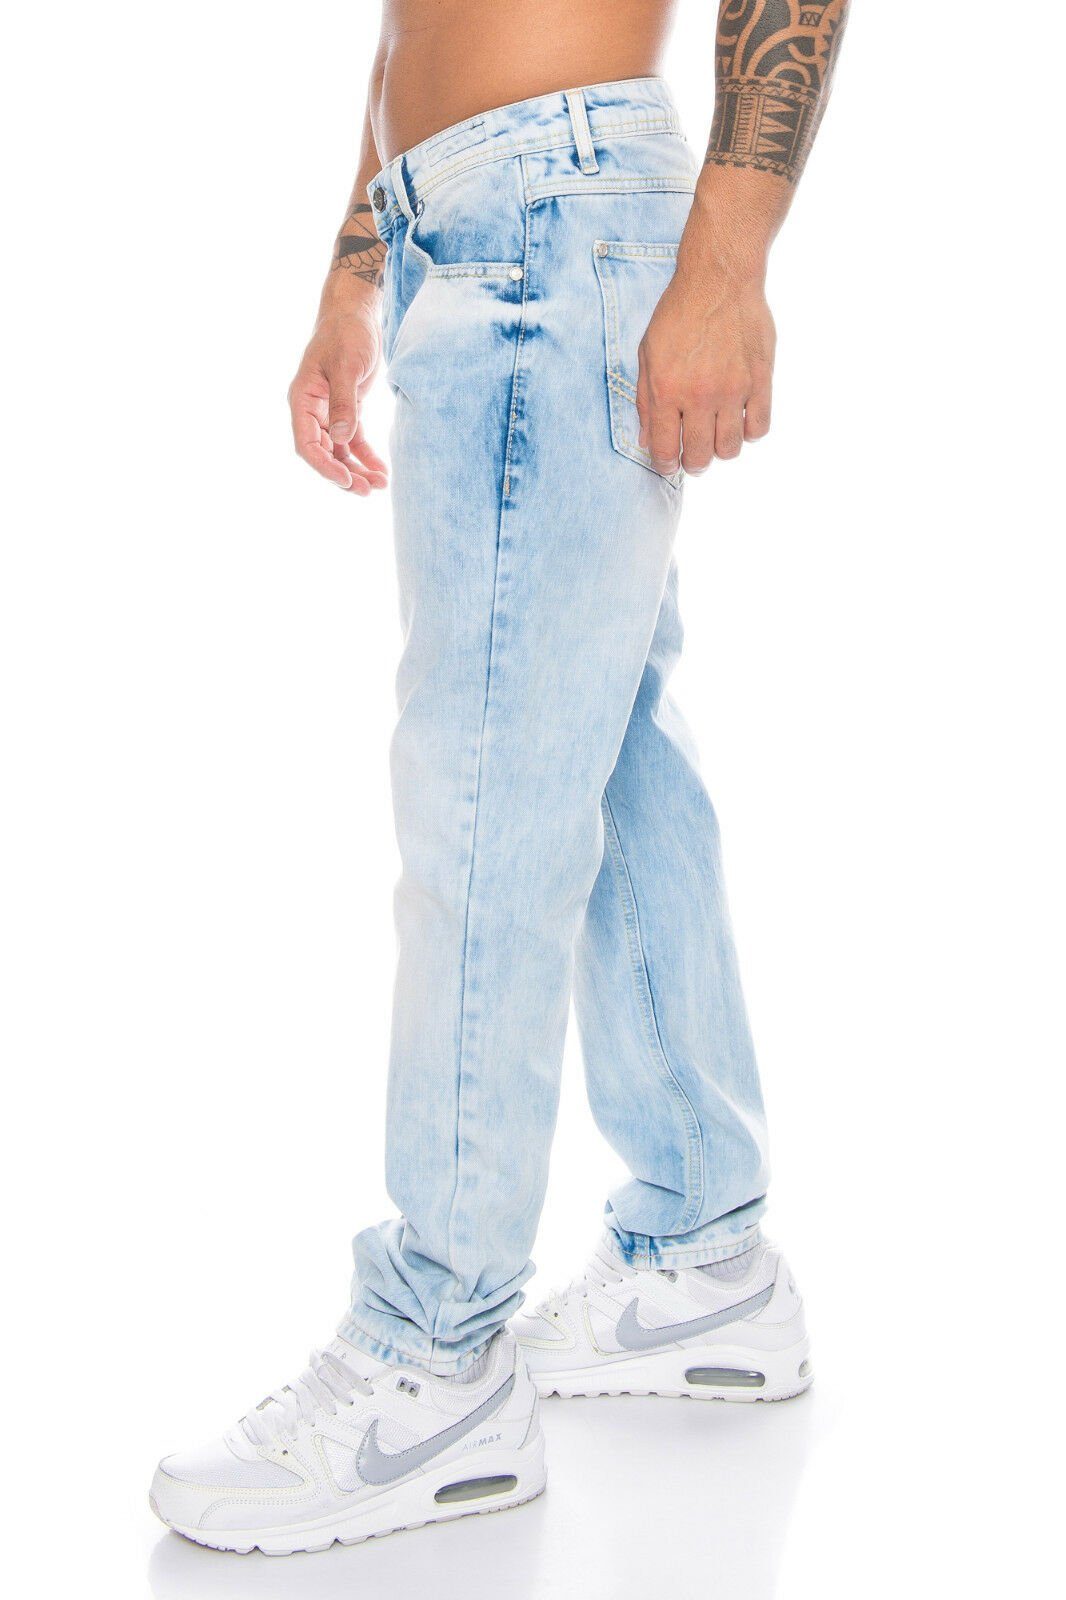 Herren mit Hose Nähten Regular-fit-Jeans Jeans dezenten Look mit Nähten im Baxx & dezenten Cipo schlichten Jeans